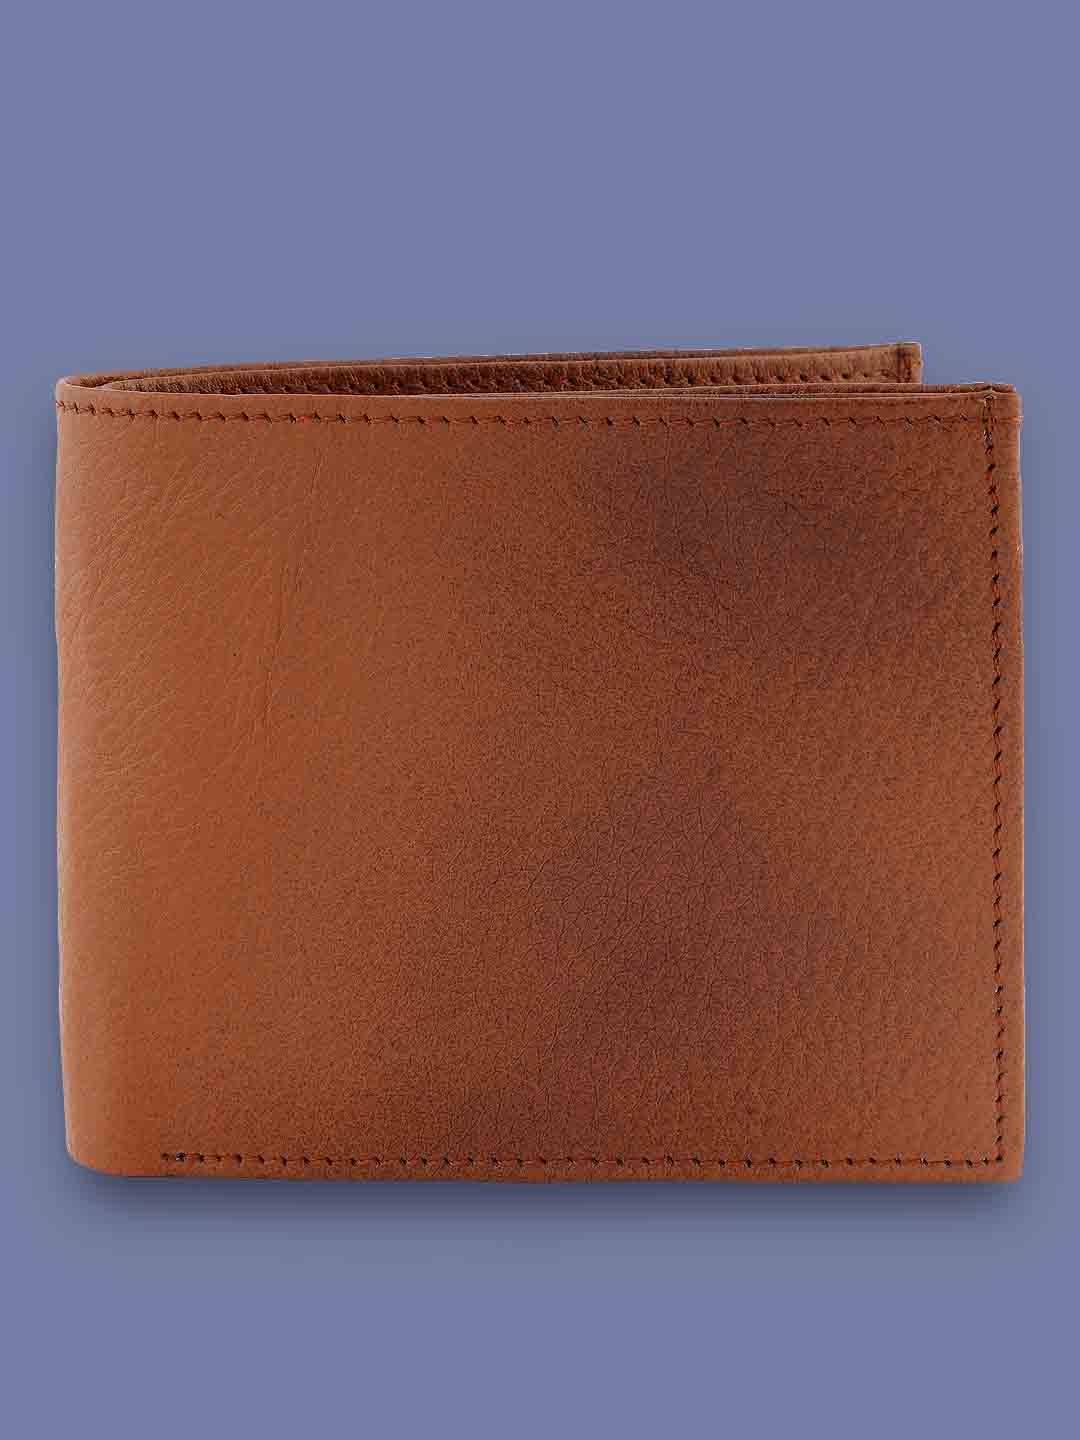 Buy USL Men's Wallet, Simple Purse, Gents Wallet, Gents Purse for Men Brown  Colour at Amazon.in